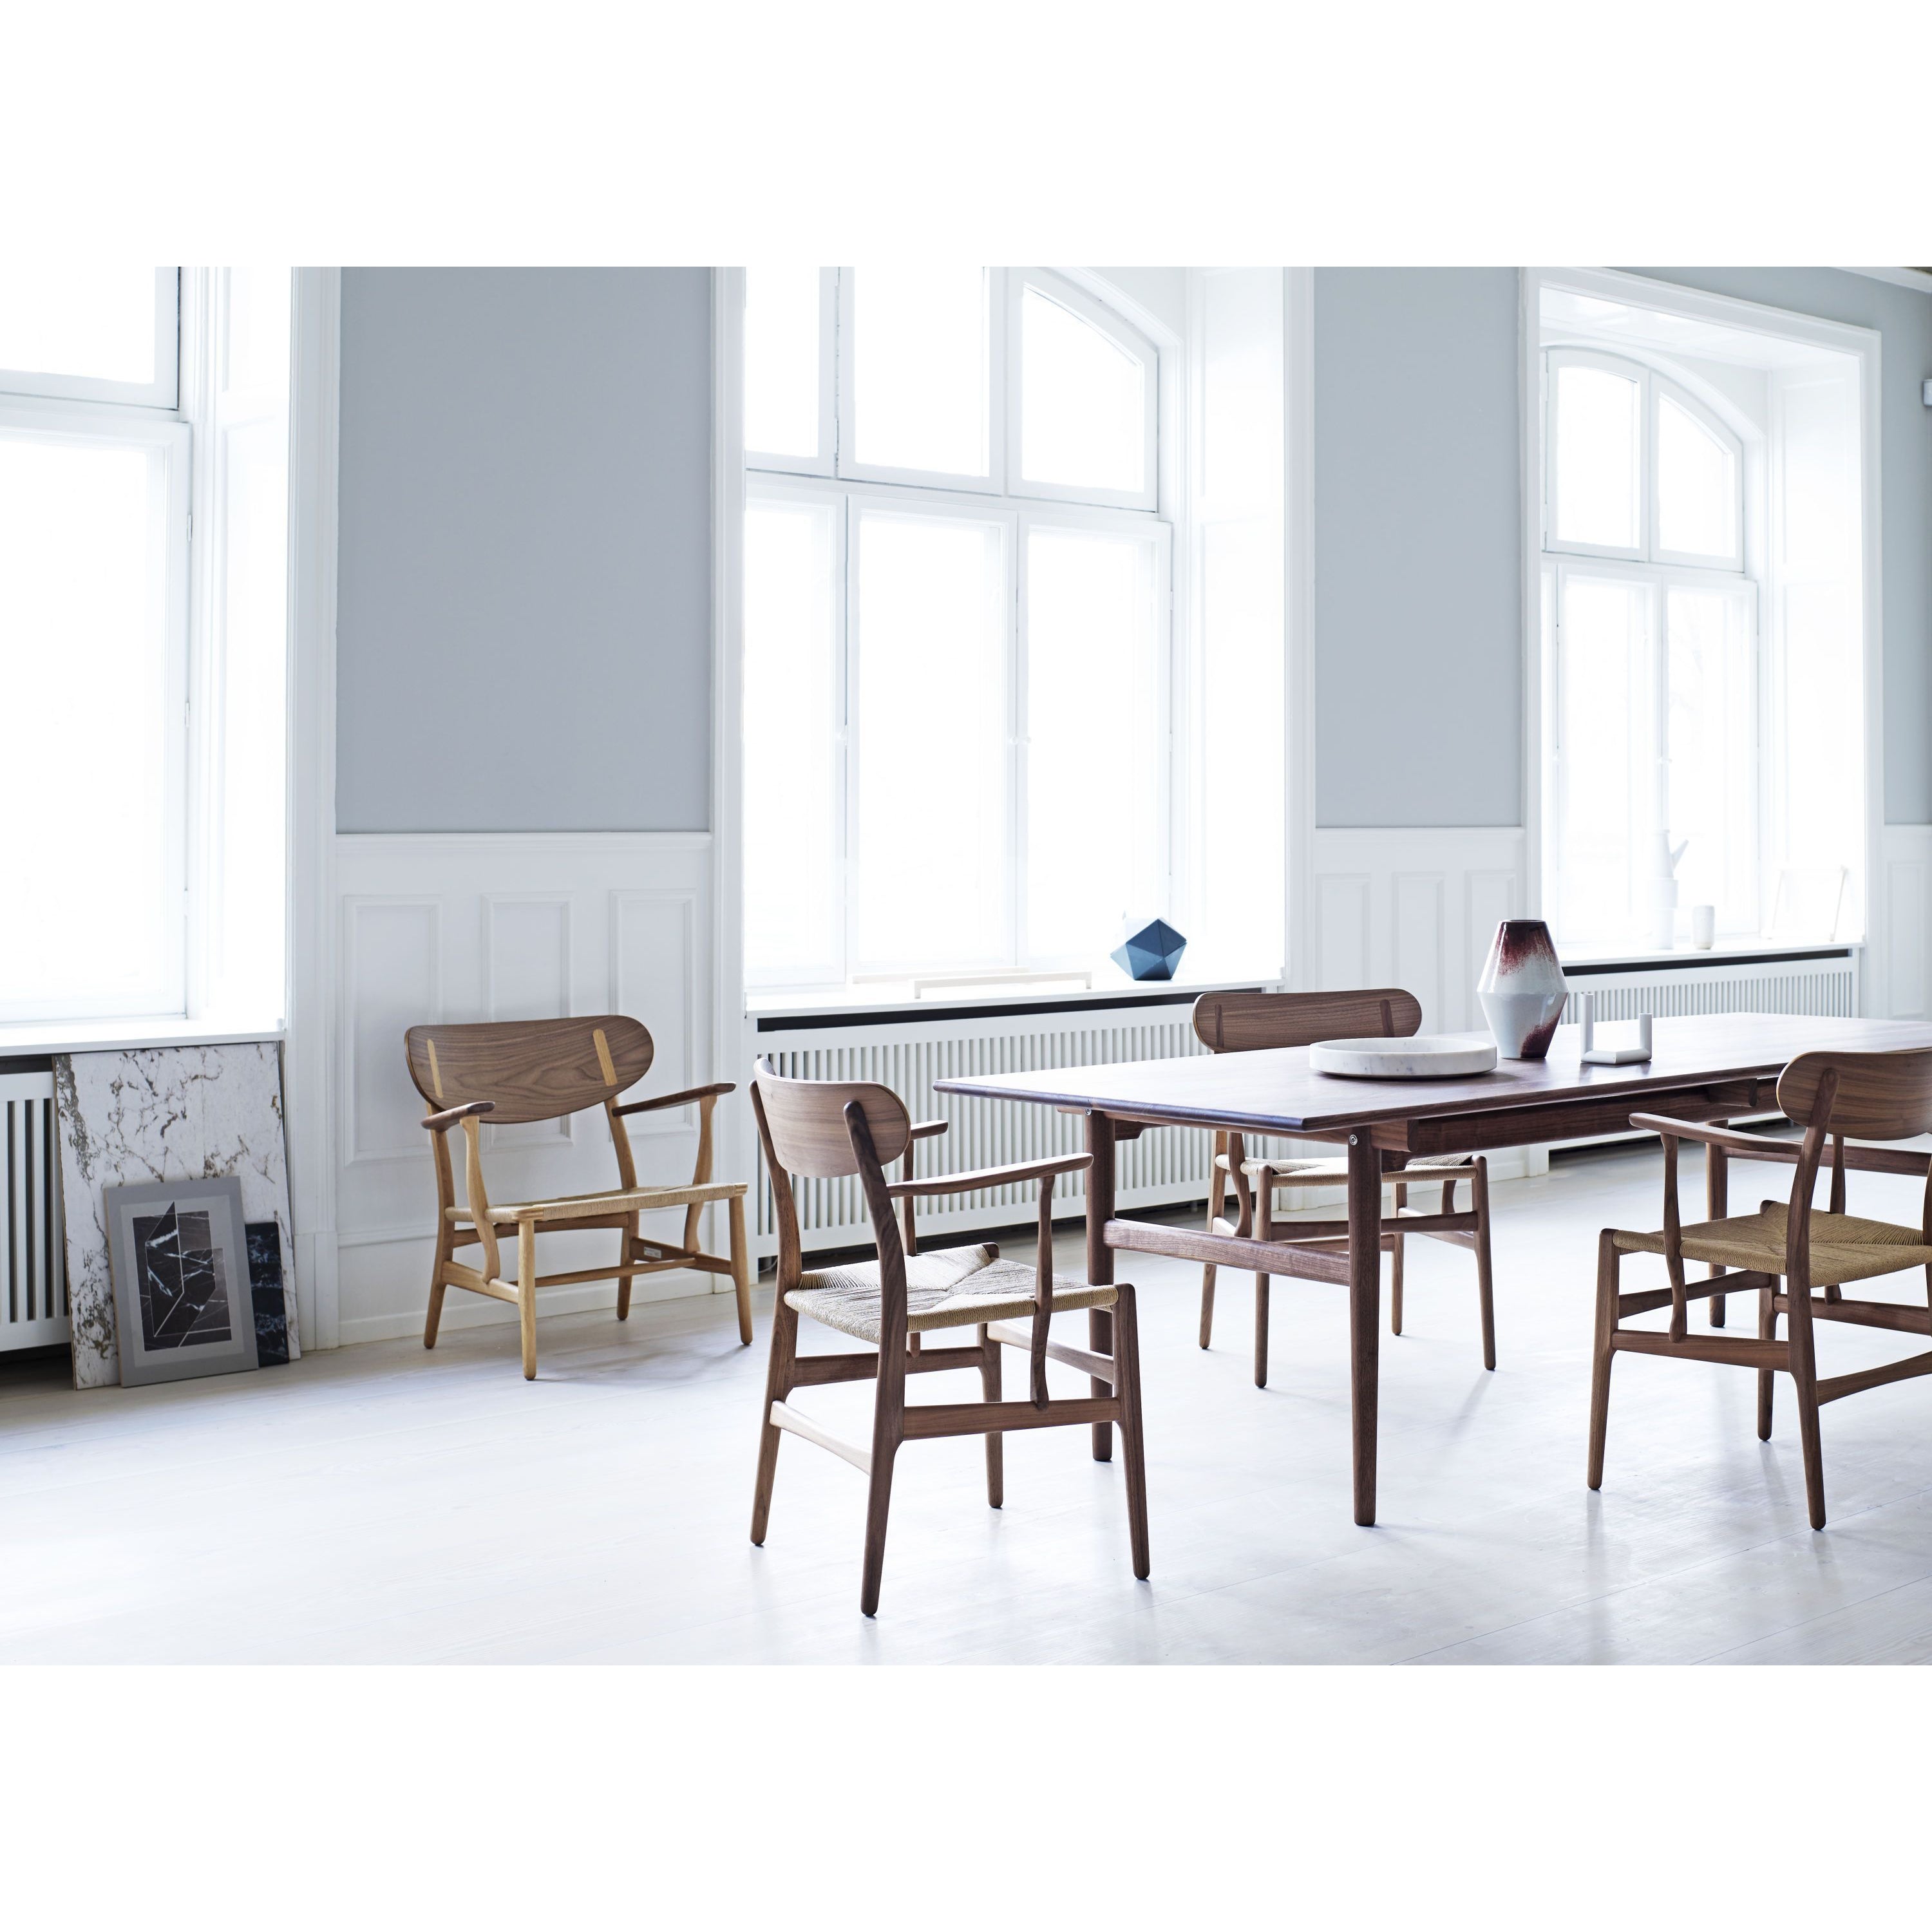 Carl Hansen CH22 Lounge -stol, oljad ek/naturlig sladd